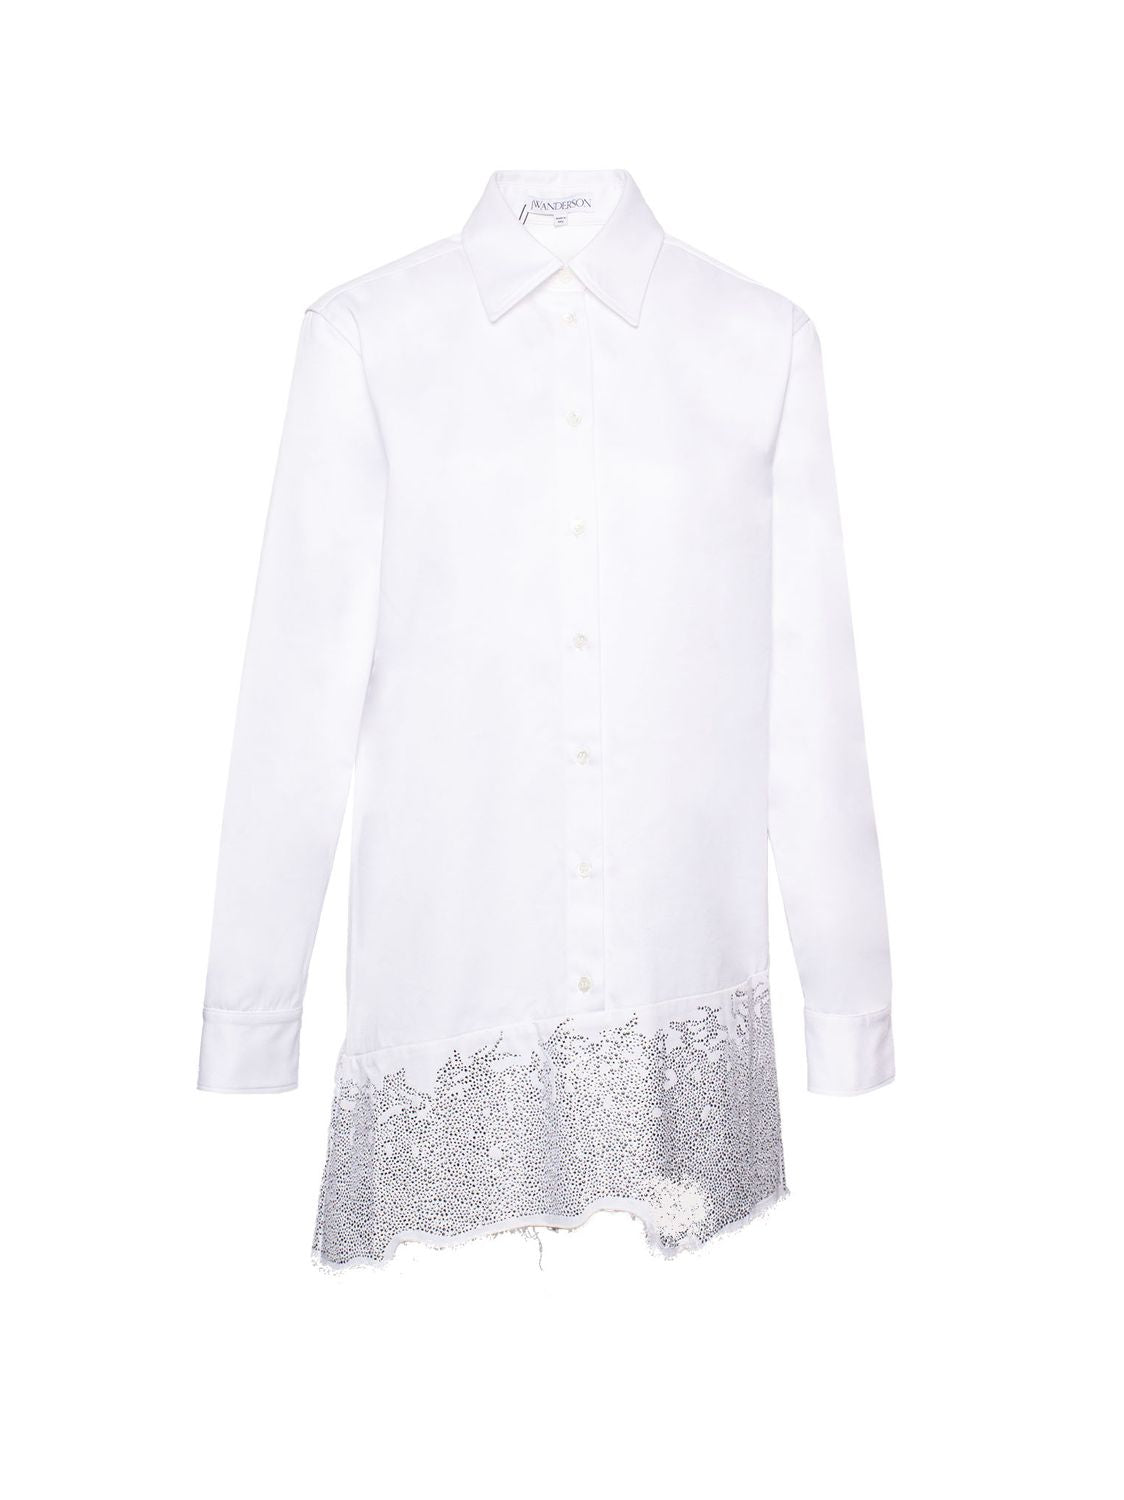 JW ANDERSON Cotton Crystal-Embellished Shirt Dress for Women